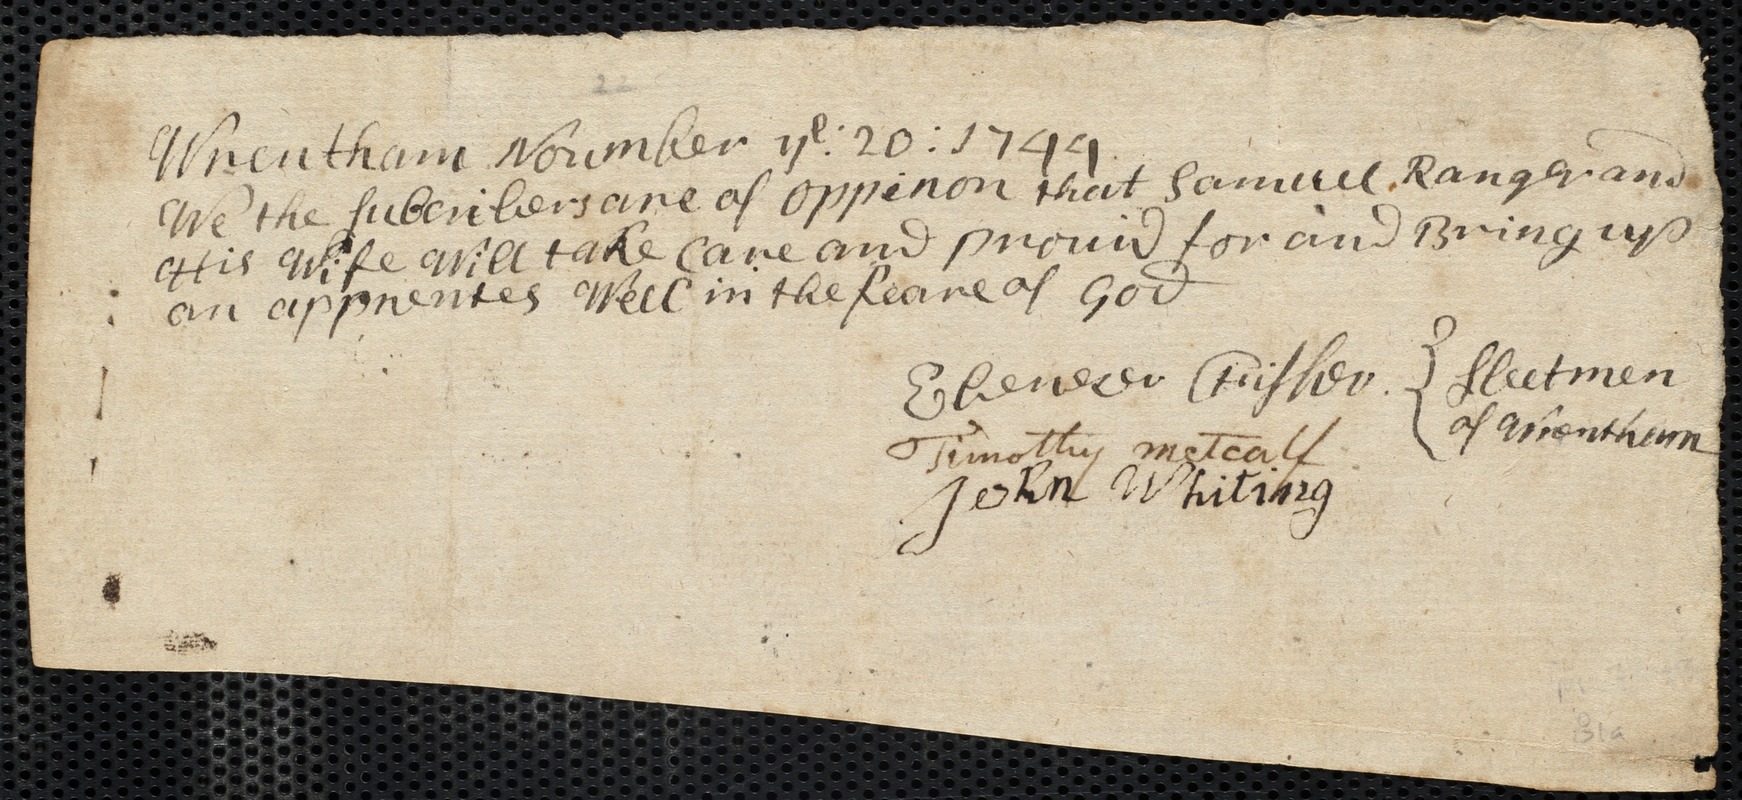 Mercy Clay indentured to apprentice with Samuel Ranger of Wrentham, 5 December 1744